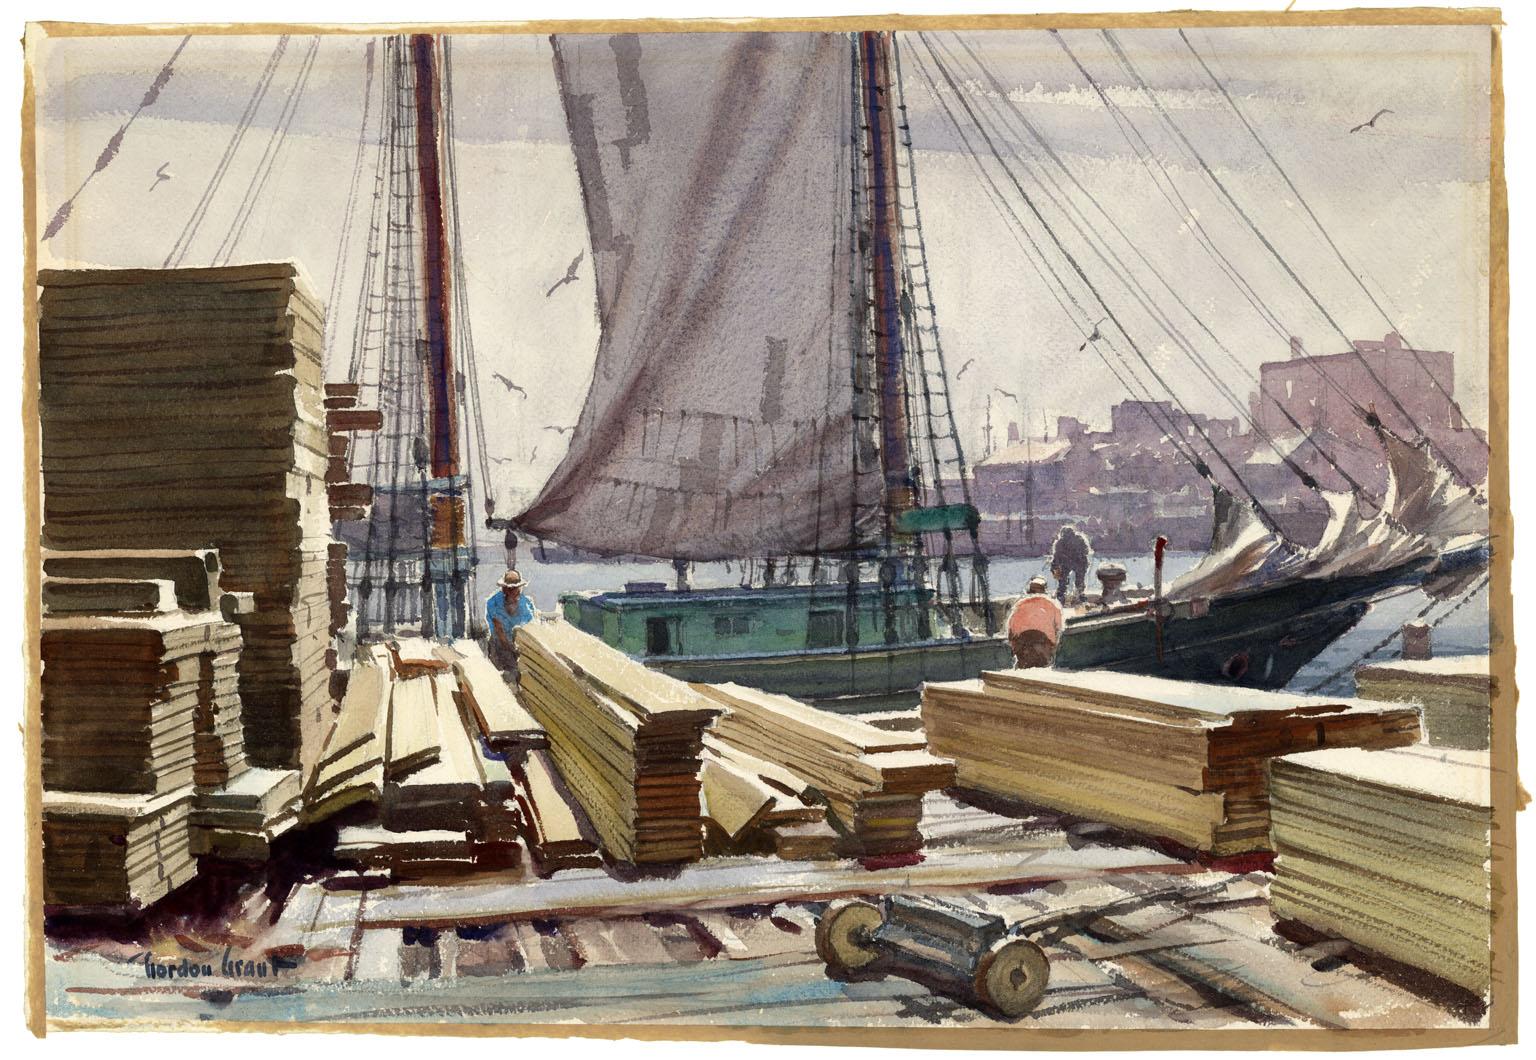 The Lumber Wharf - Art by Gordon Grant